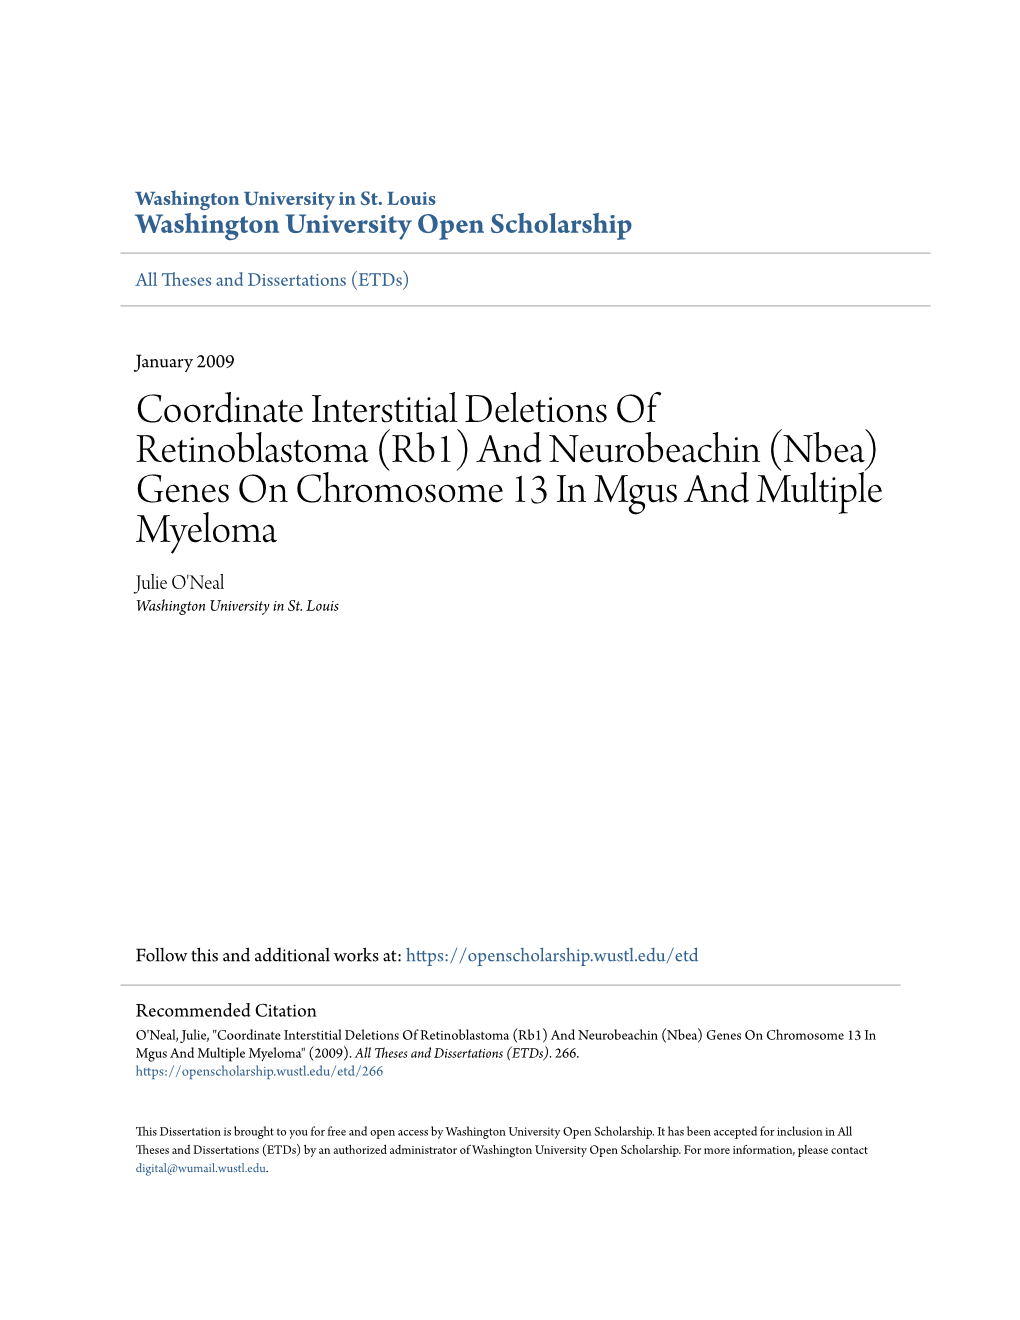 Rb1) and Neurobeachin (Nbea) Genes on Chromosome 13 in Mgus and Multiple Myeloma Julie O'neal Washington University in St